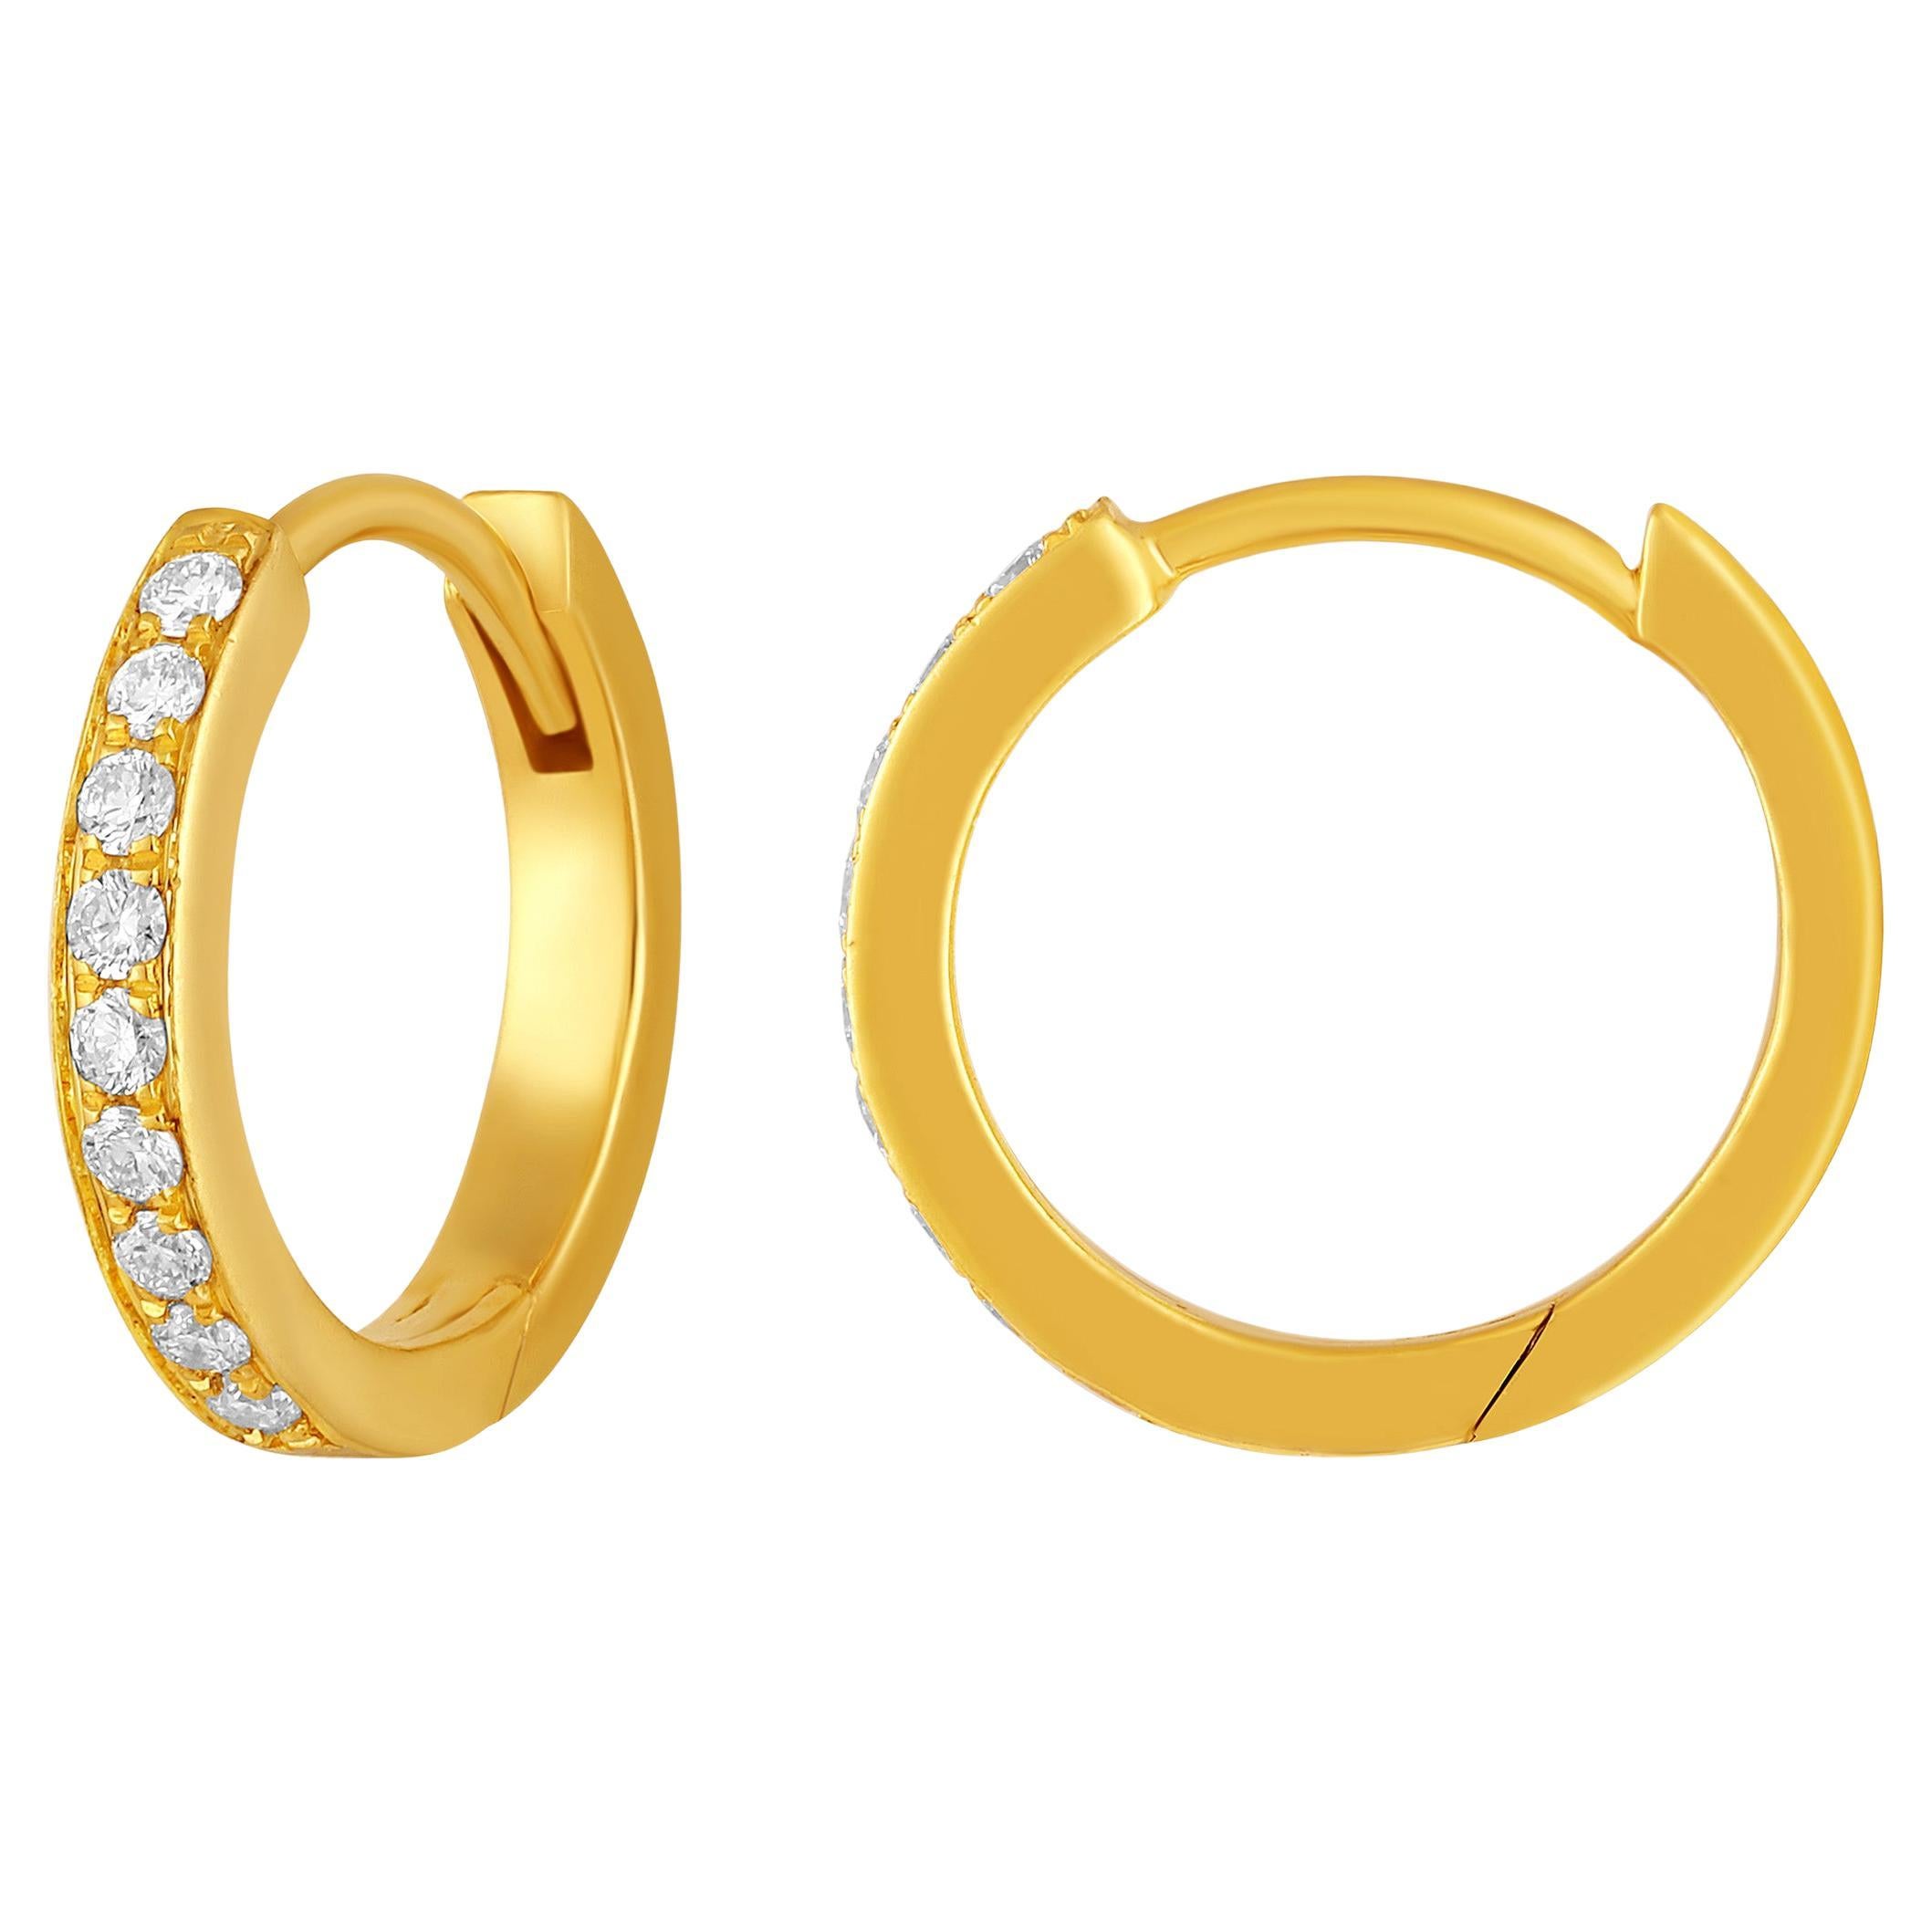 Certified 18k Gold 0.1 Carat Natural Diamond Huggie Hoop Yellow Earrings